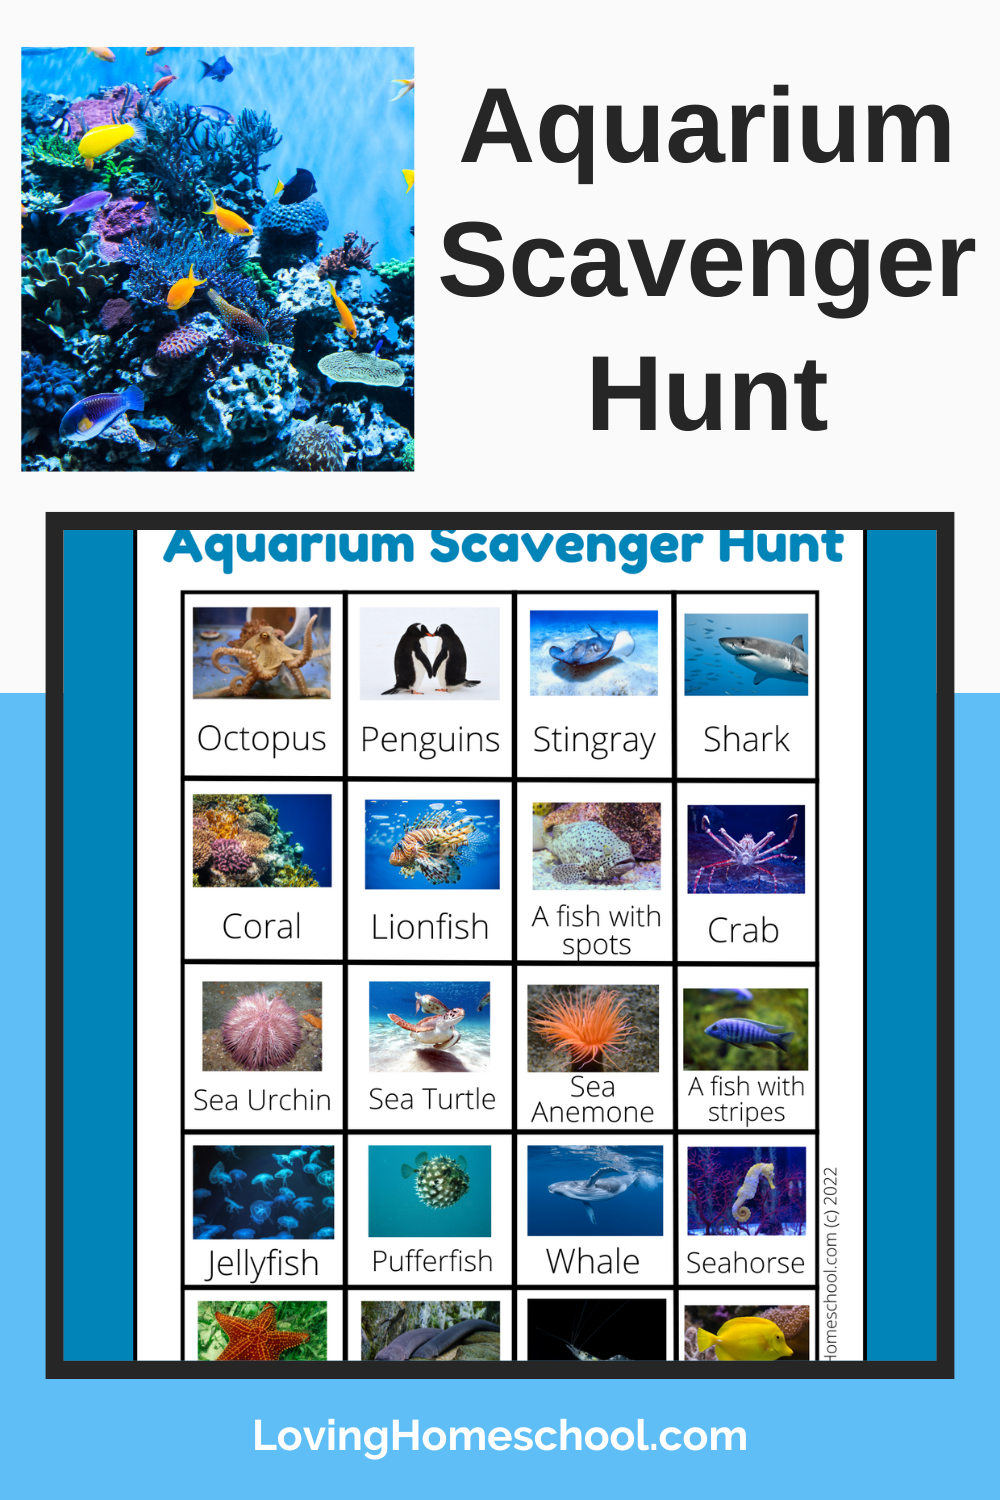 Aquarium Scavenger Hunt Pinterest Pin